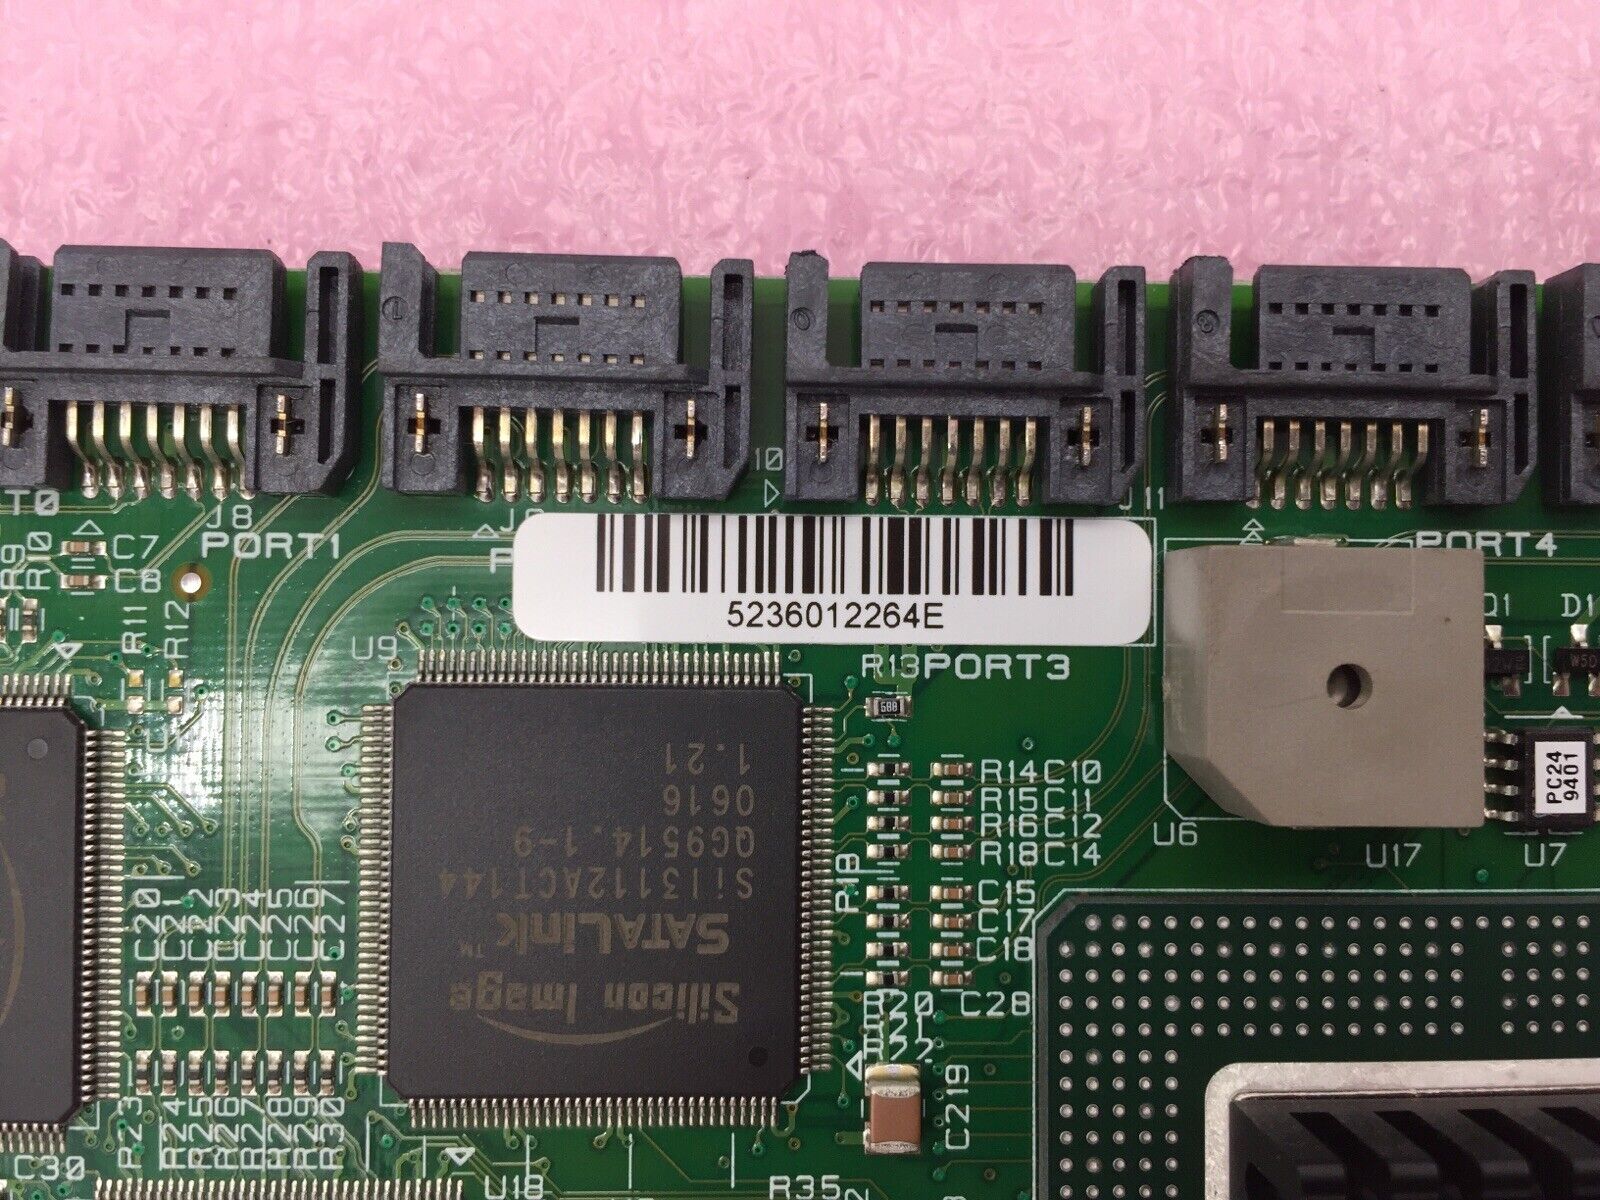 Intel C61794-002 SATA RAID Controller PCI-X 64MB